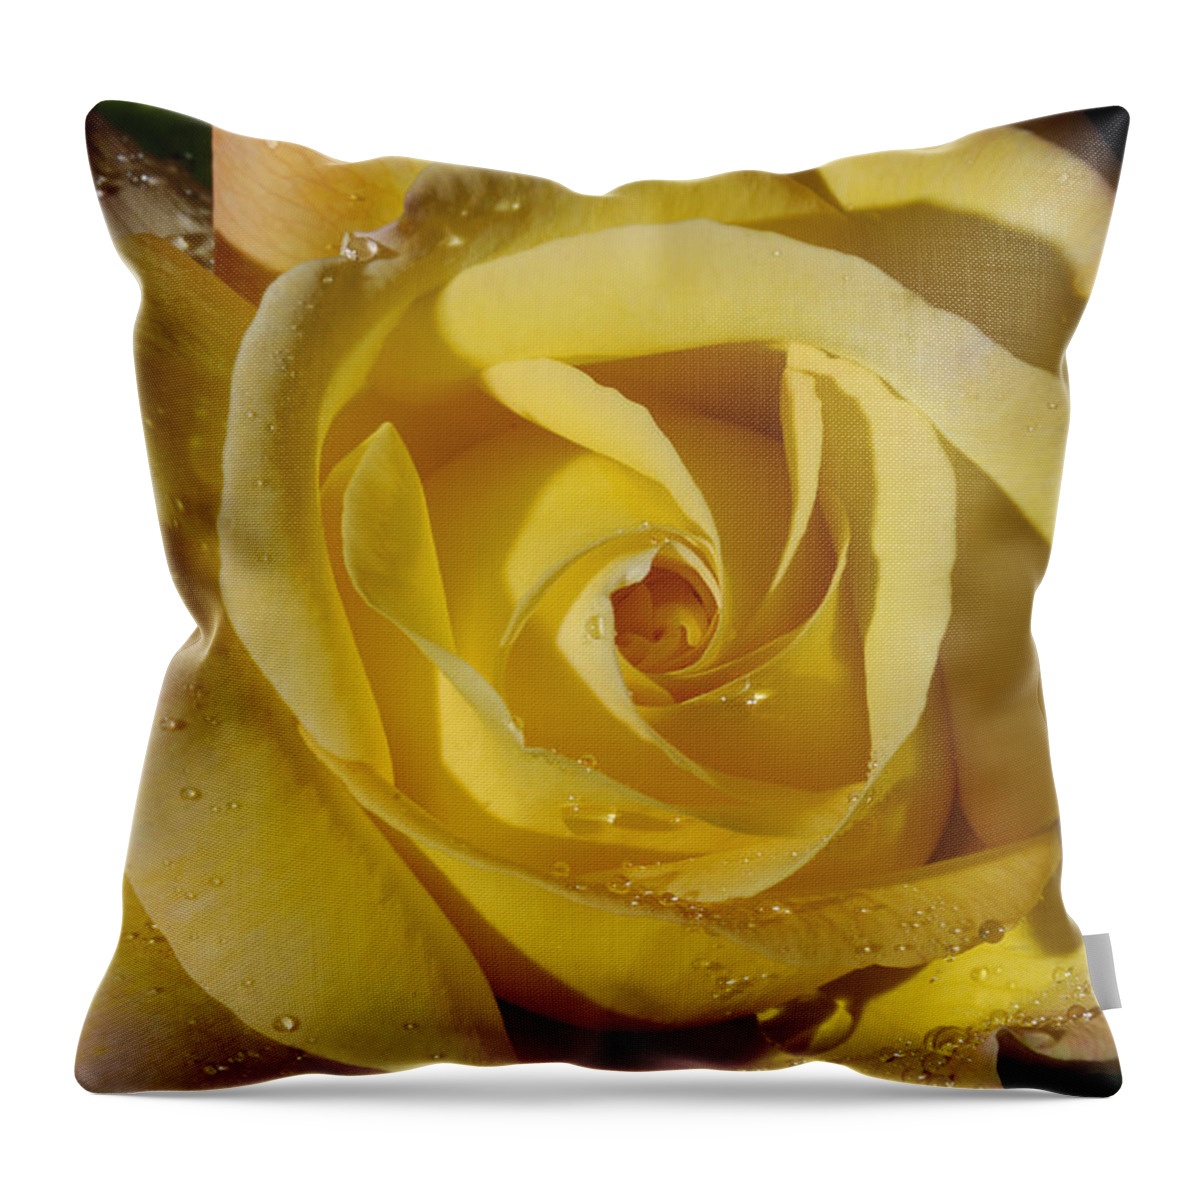 Rose Throw Pillow featuring the photograph Yellow Crisp by Arthur Fix